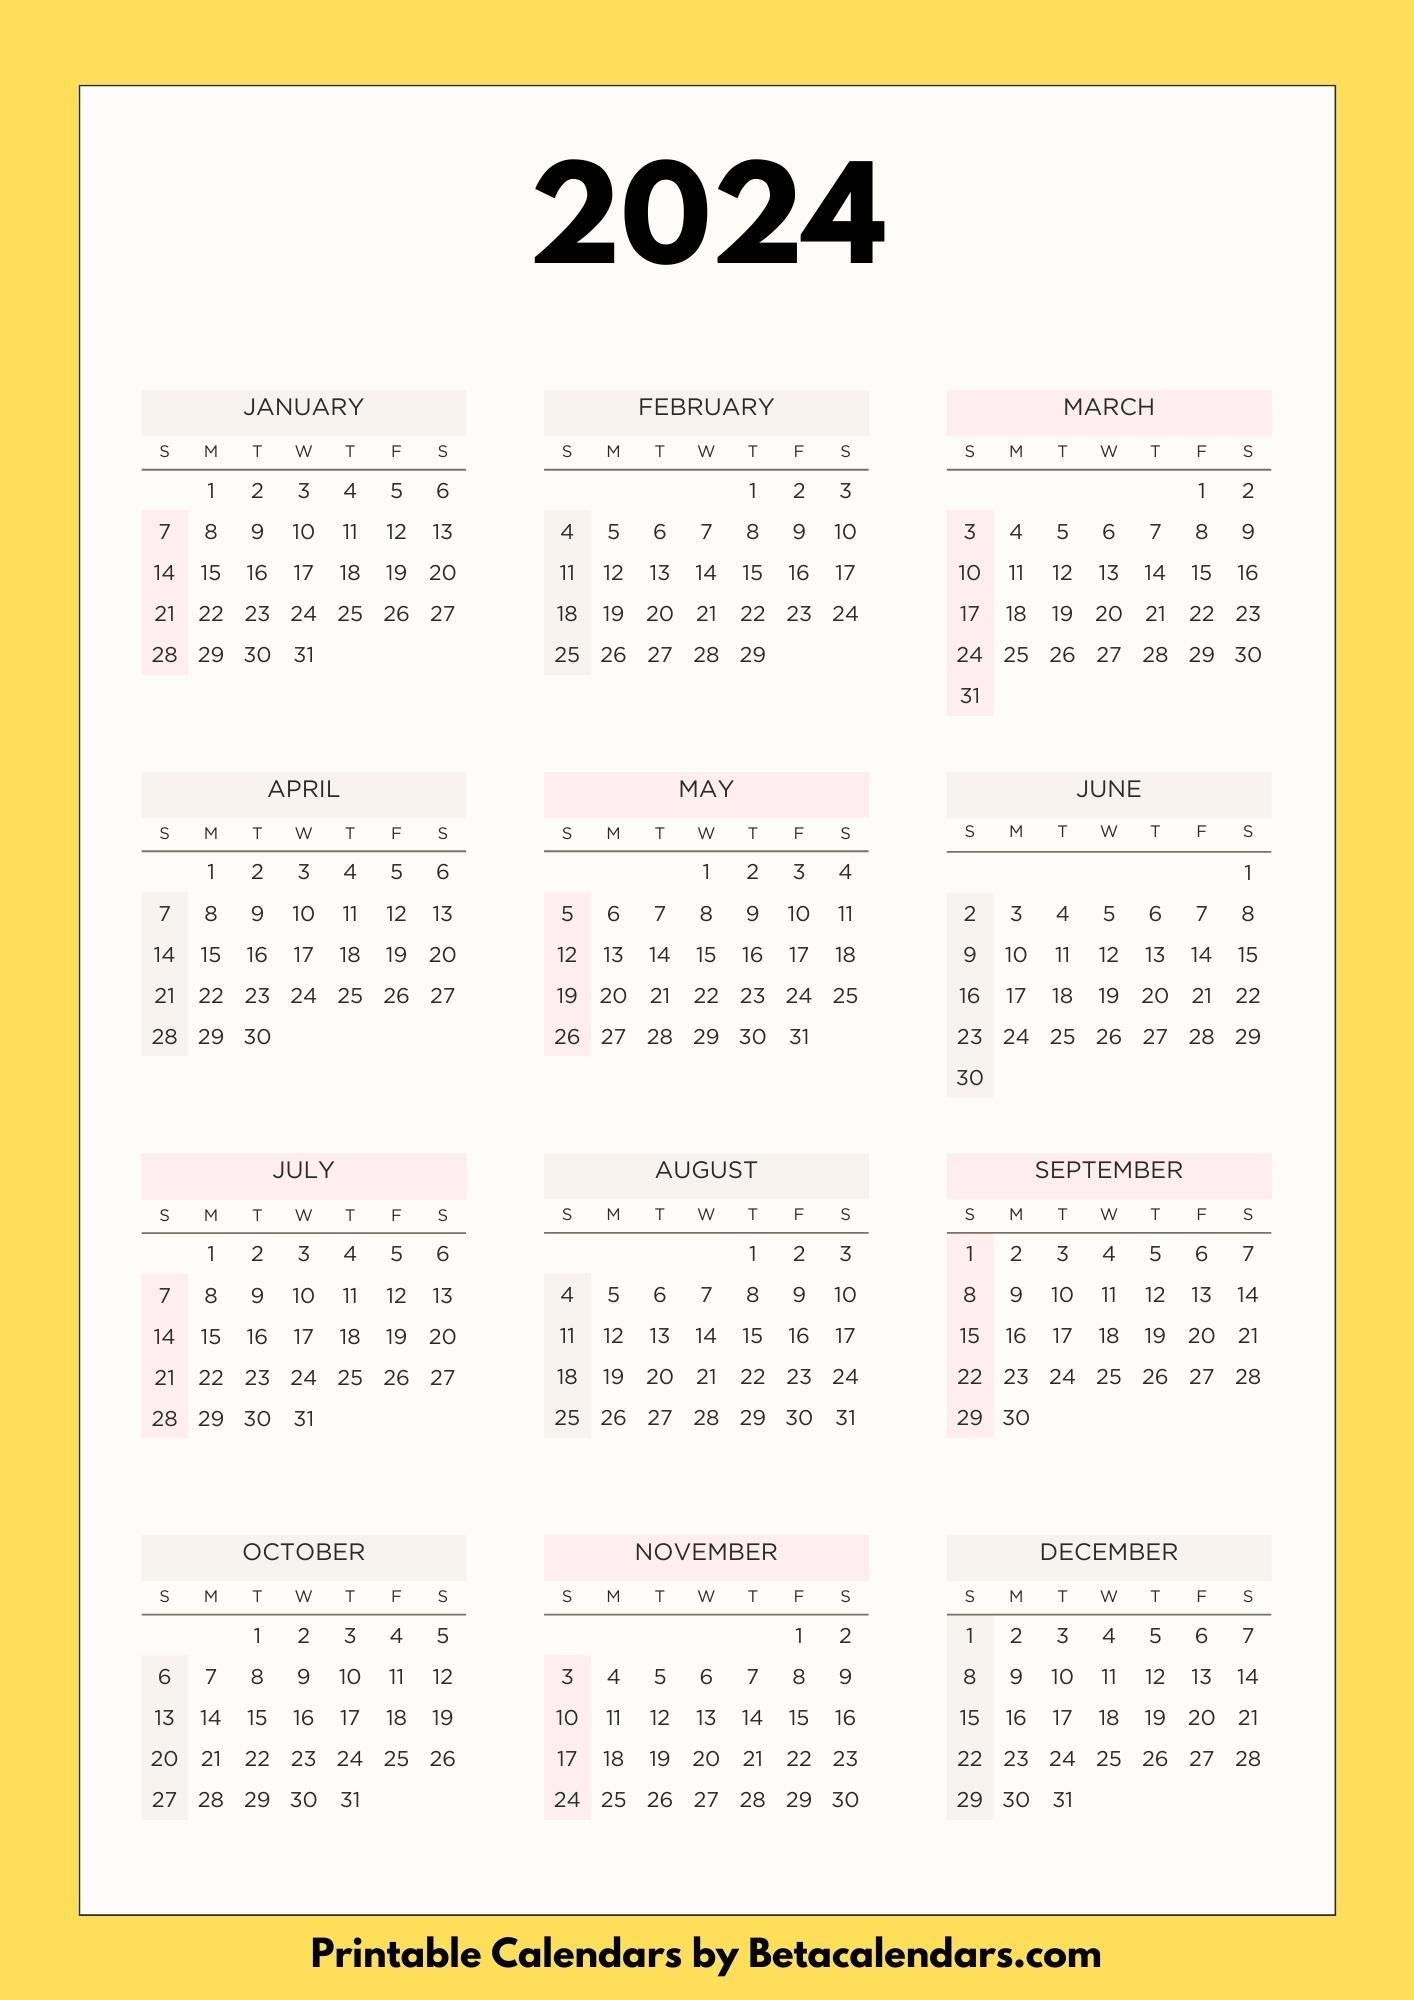 2024 Calendar - Beta Calendars | 2024 Yearly Calendar Calendar Labs